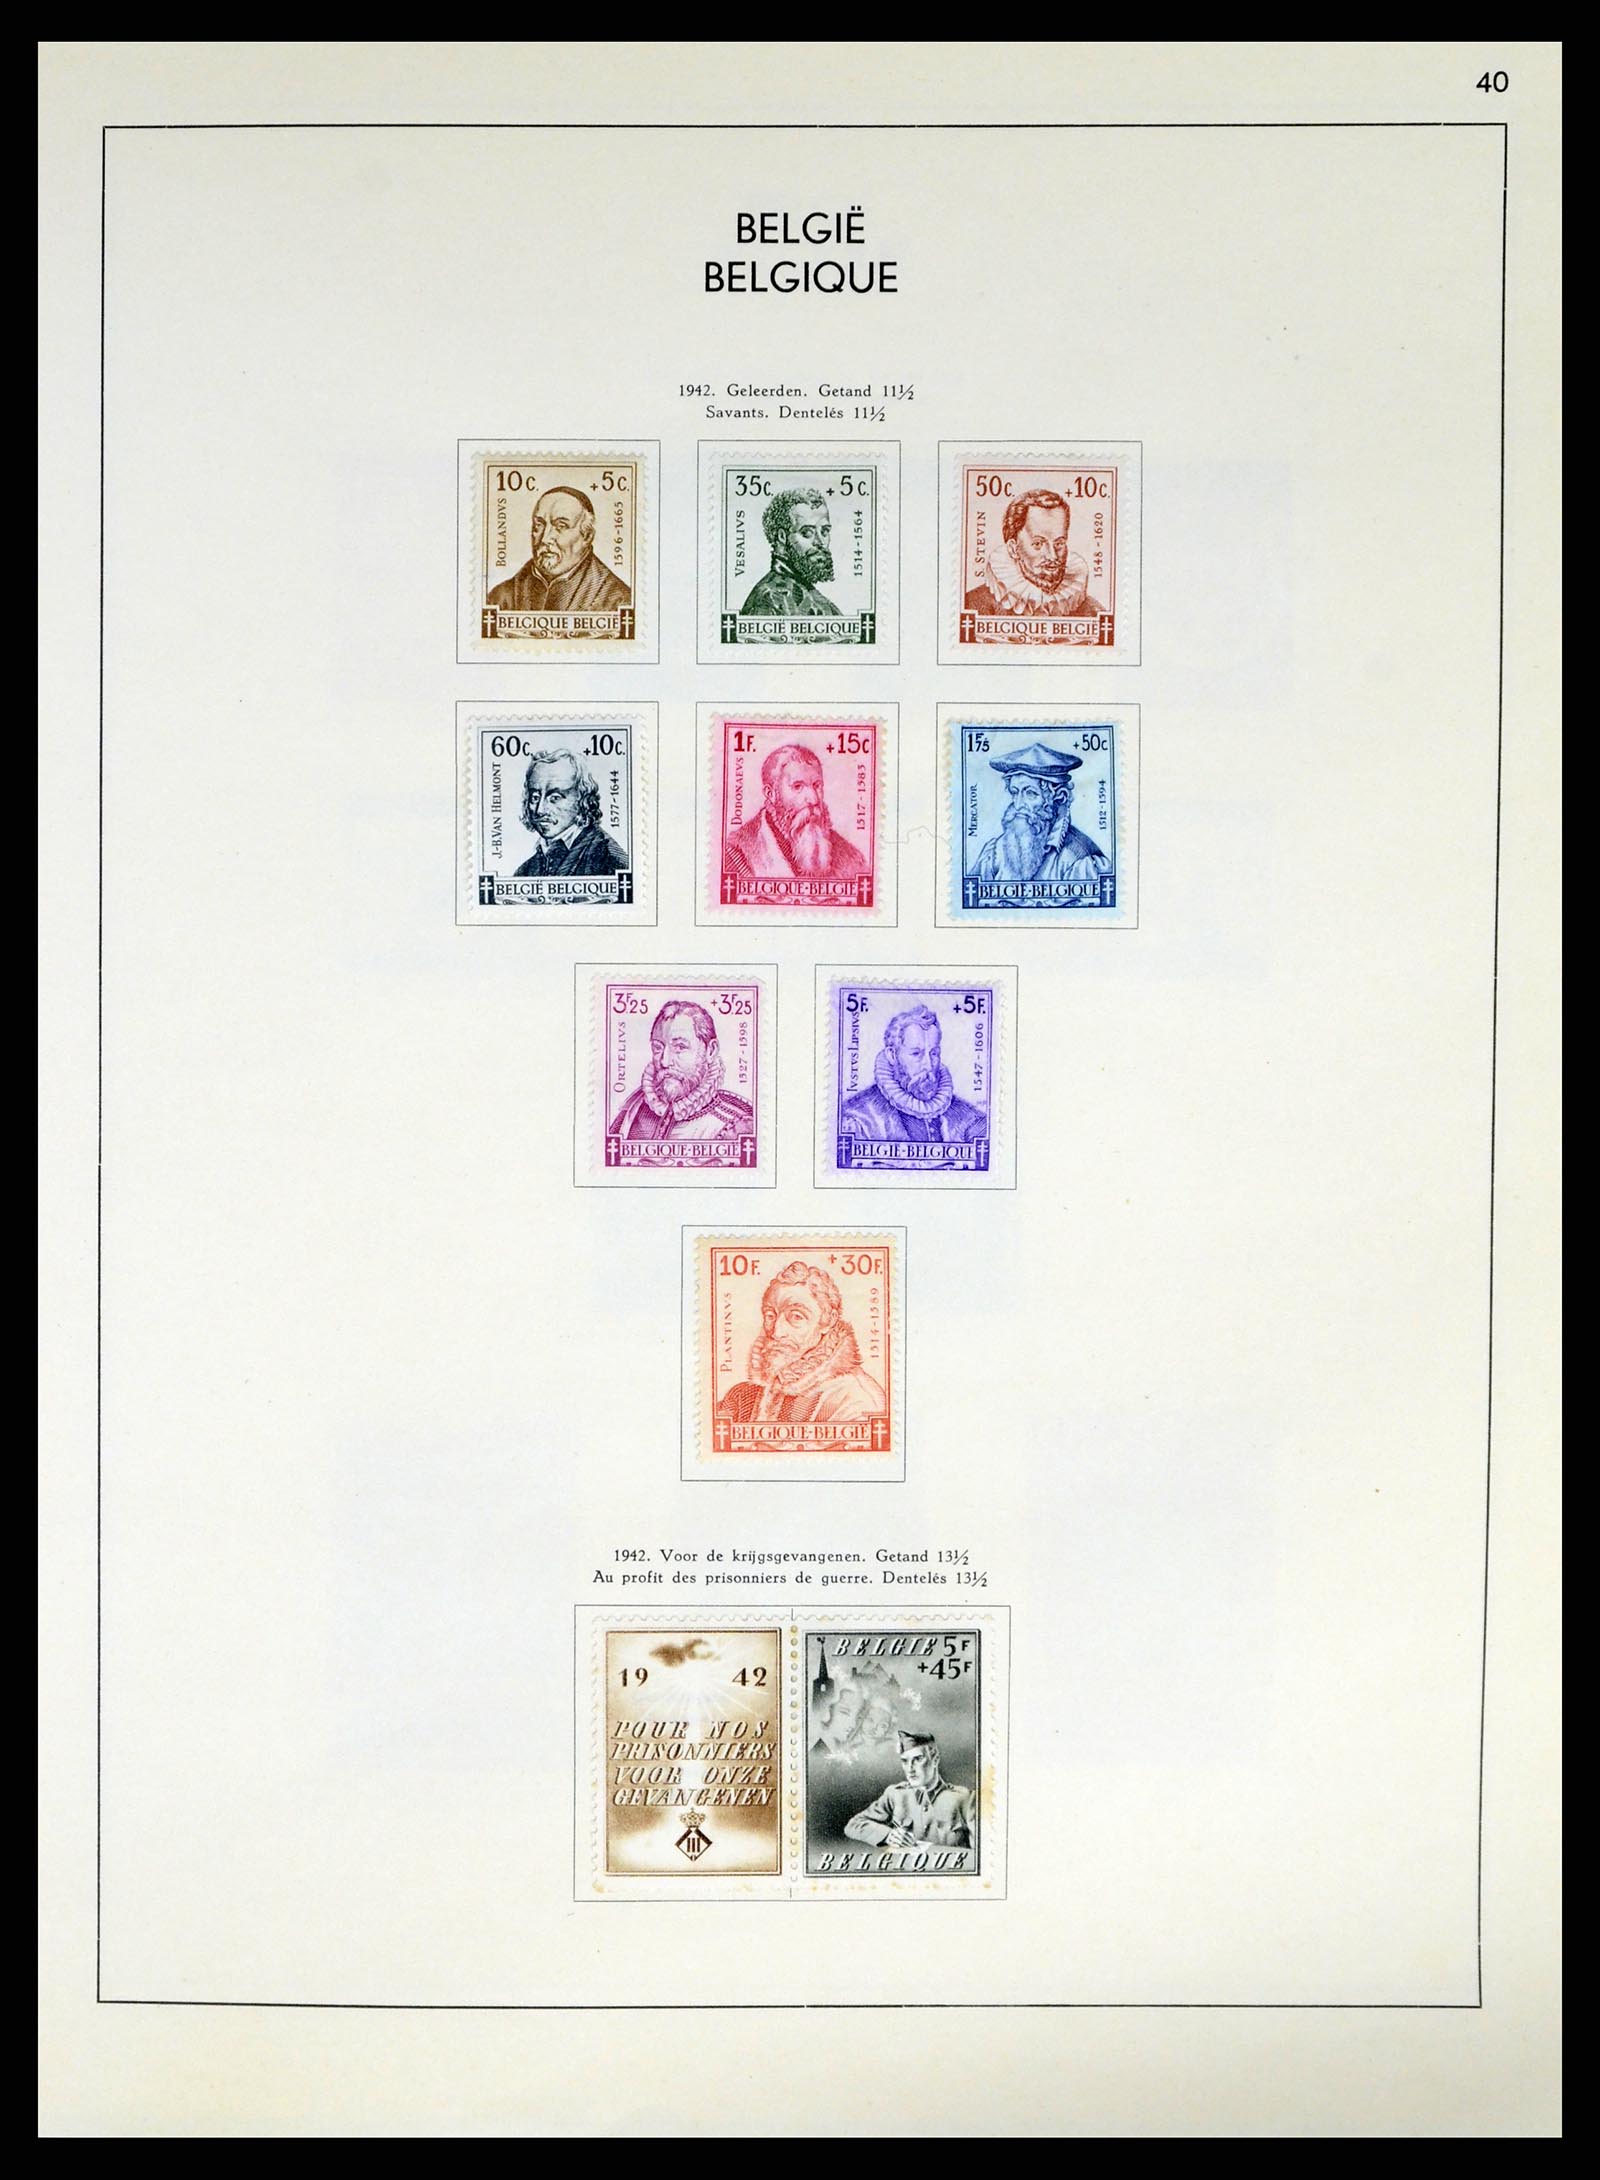 37959 057 - Stamp Collection 37959 Belgium and Belgian Congo 1849-1960.